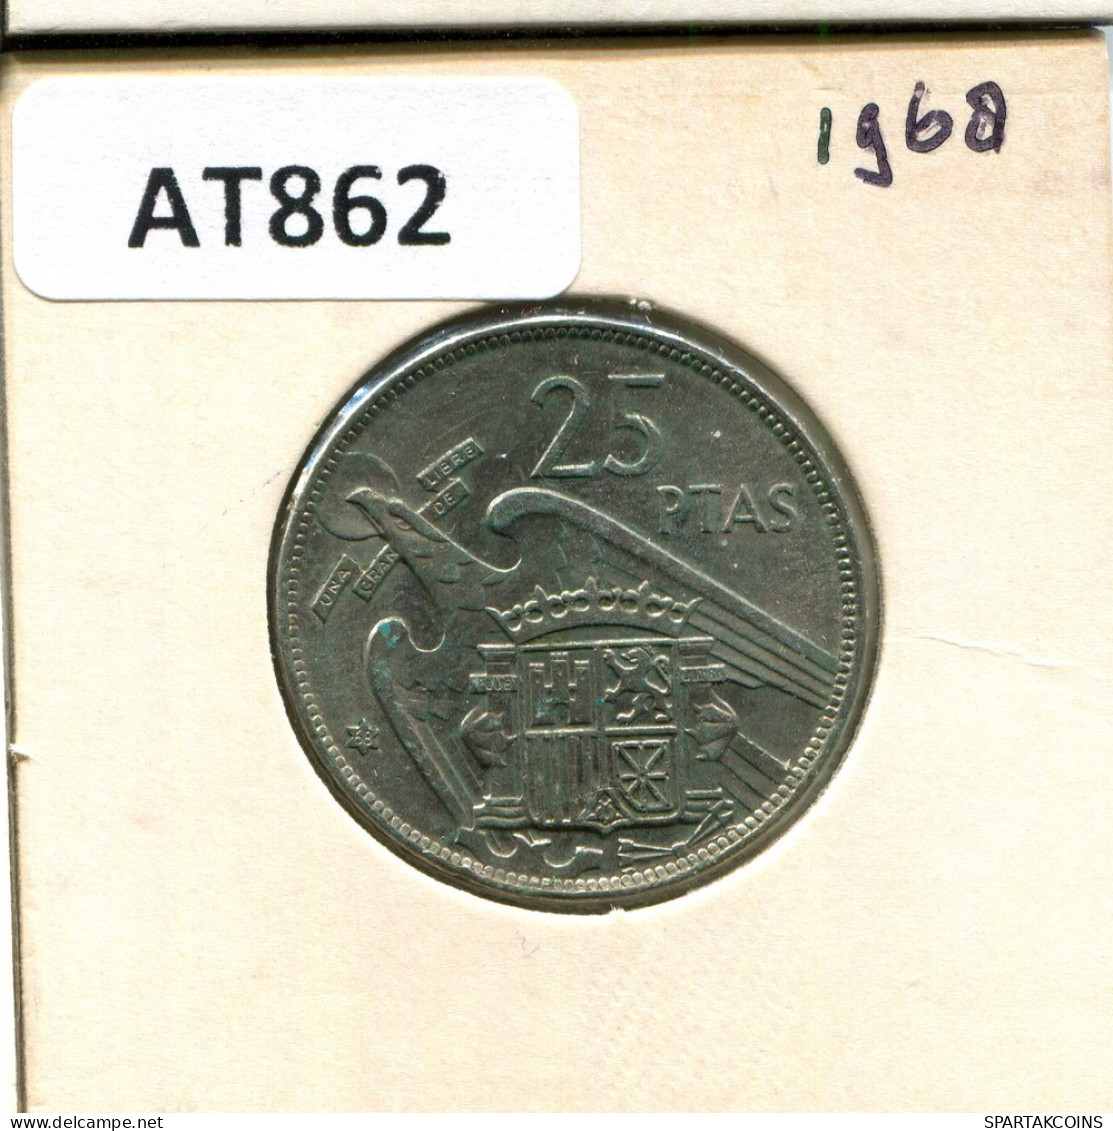 25 PESETAS 1968 SPAIN Coin #AT862.U.A - 25 Pesetas